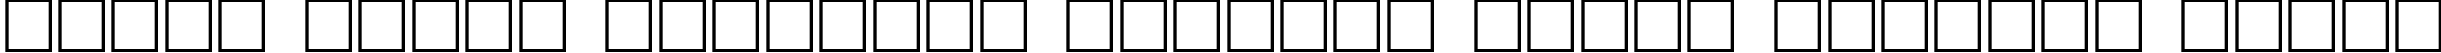 Пример написания шрифтом Symmetric Things текста на белорусском